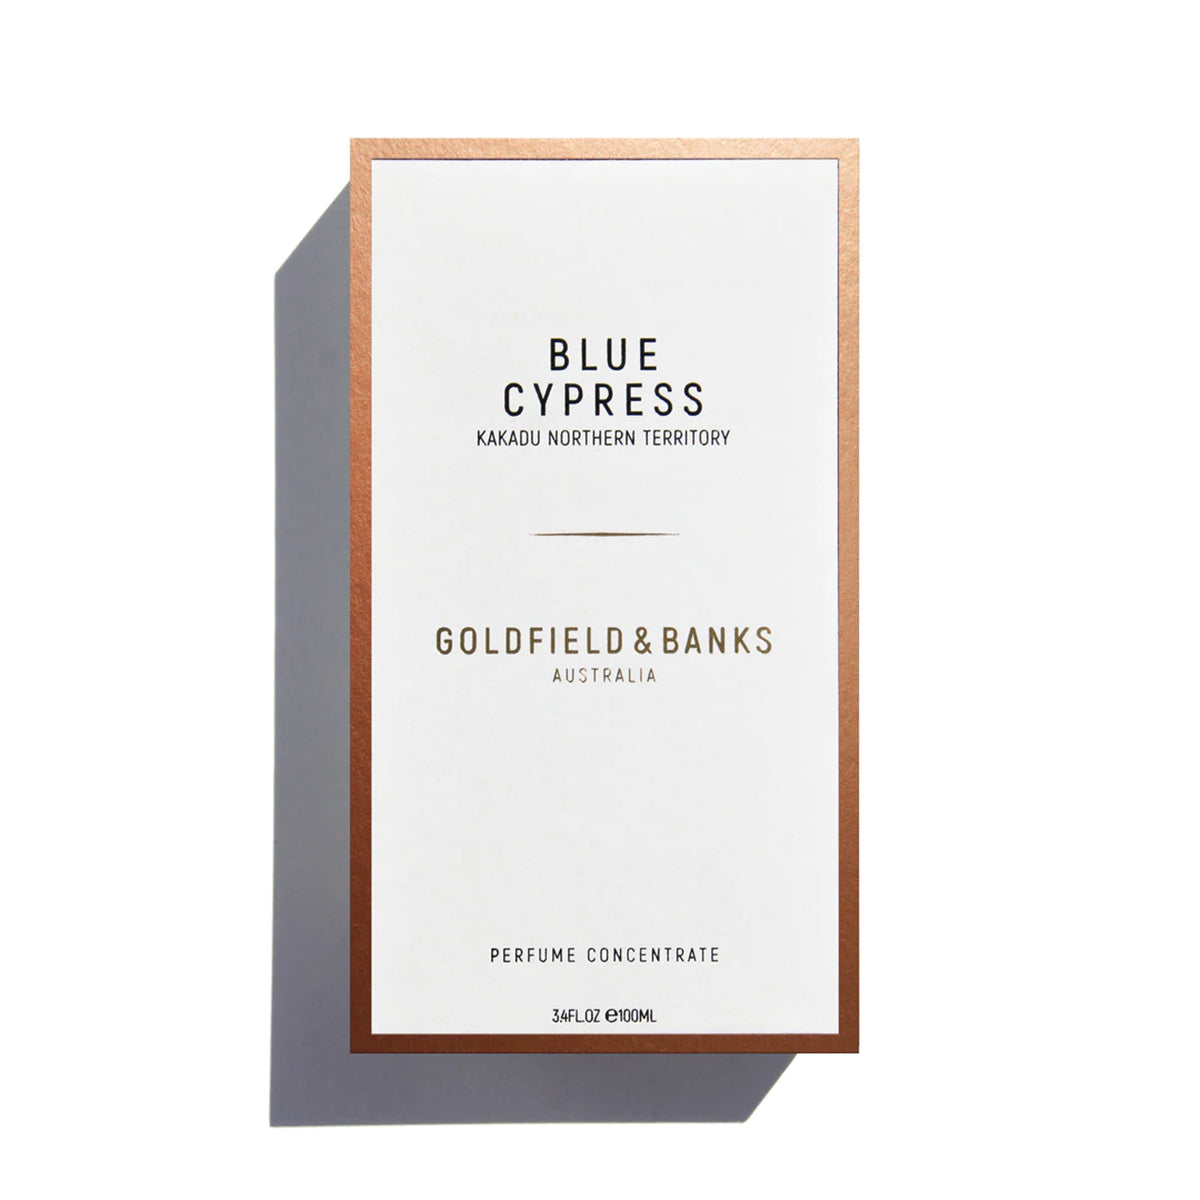 Blue Cypress by Goldfield & Banks at Indigo